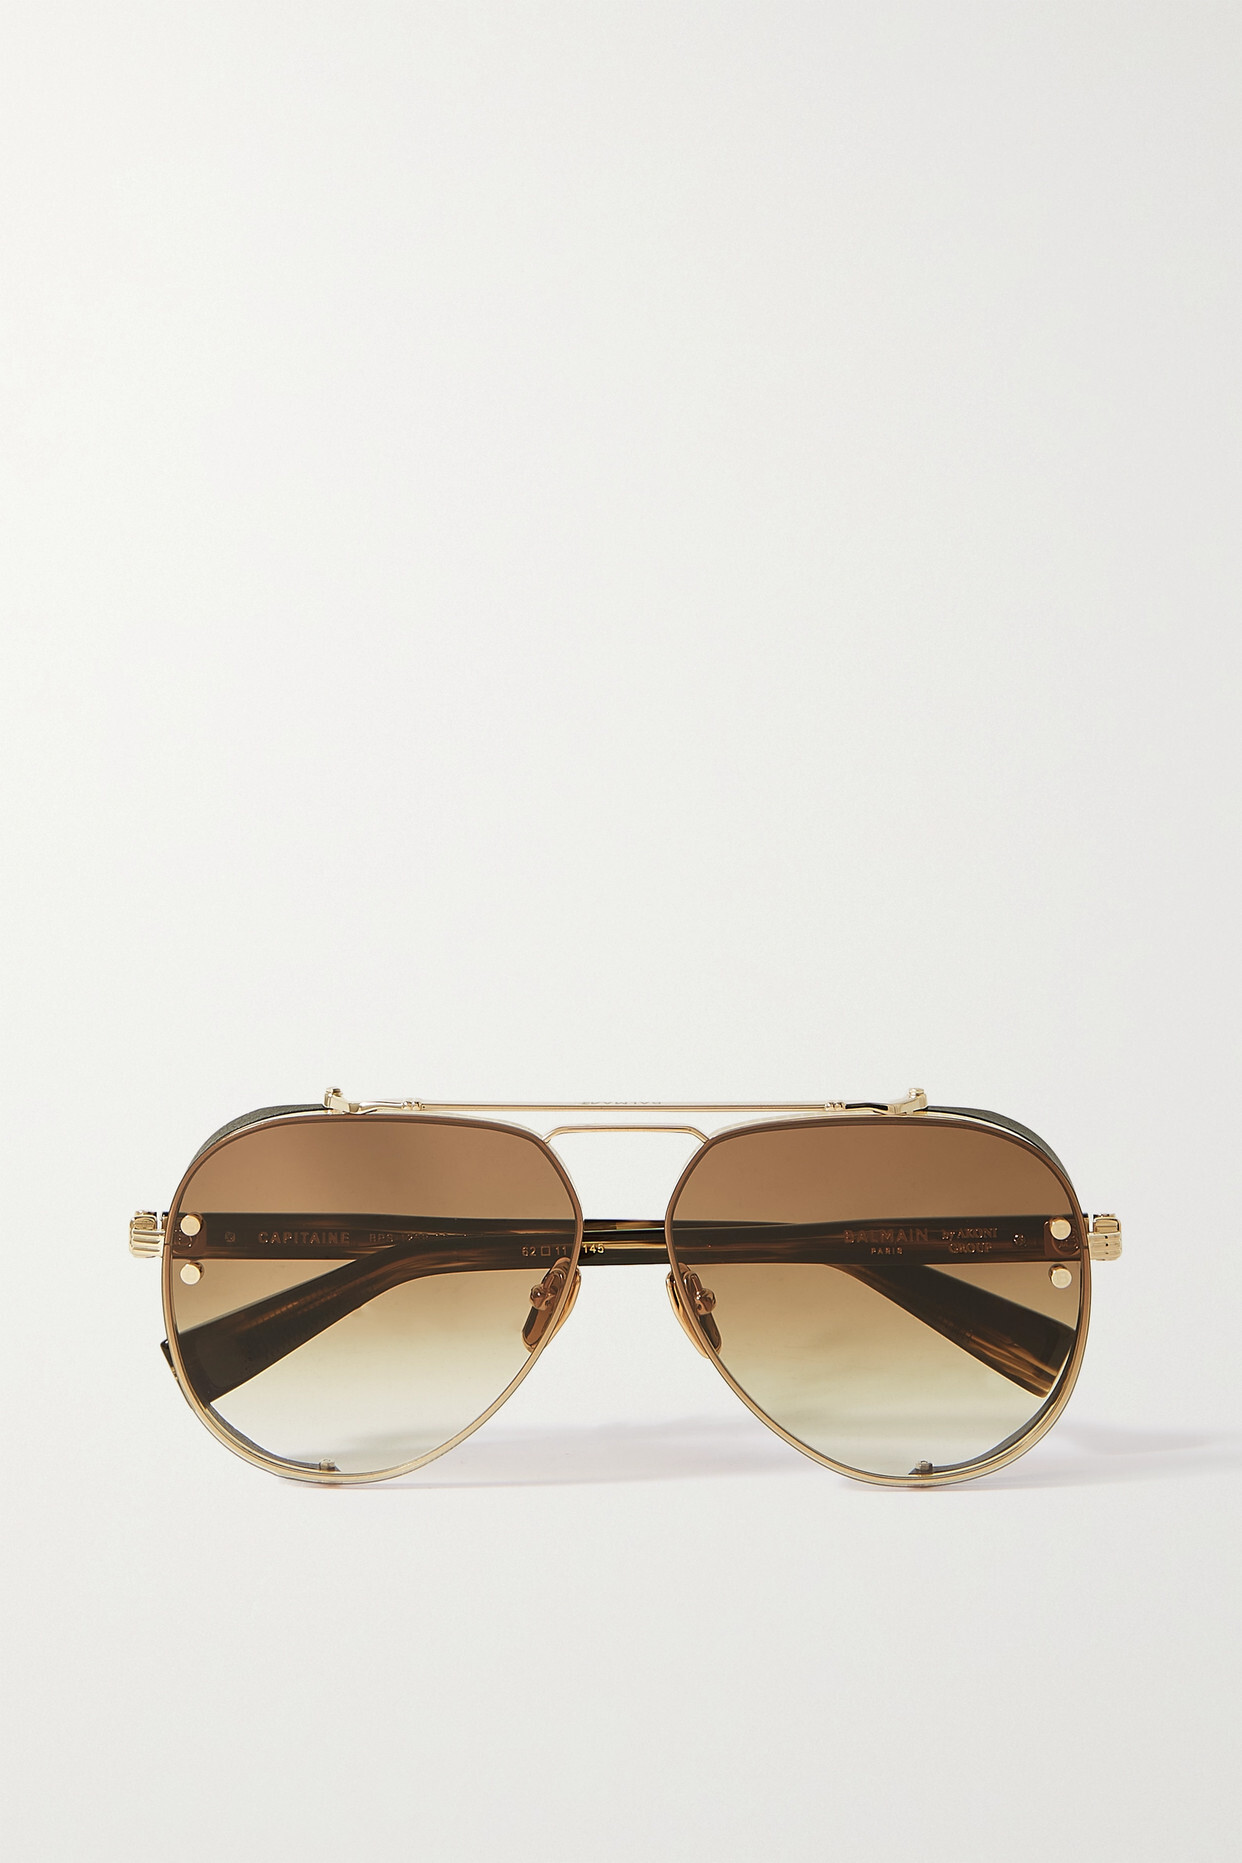 Balmain - Captaine Aviator-style Gold-tone And Acetate Sunglasses - Brown